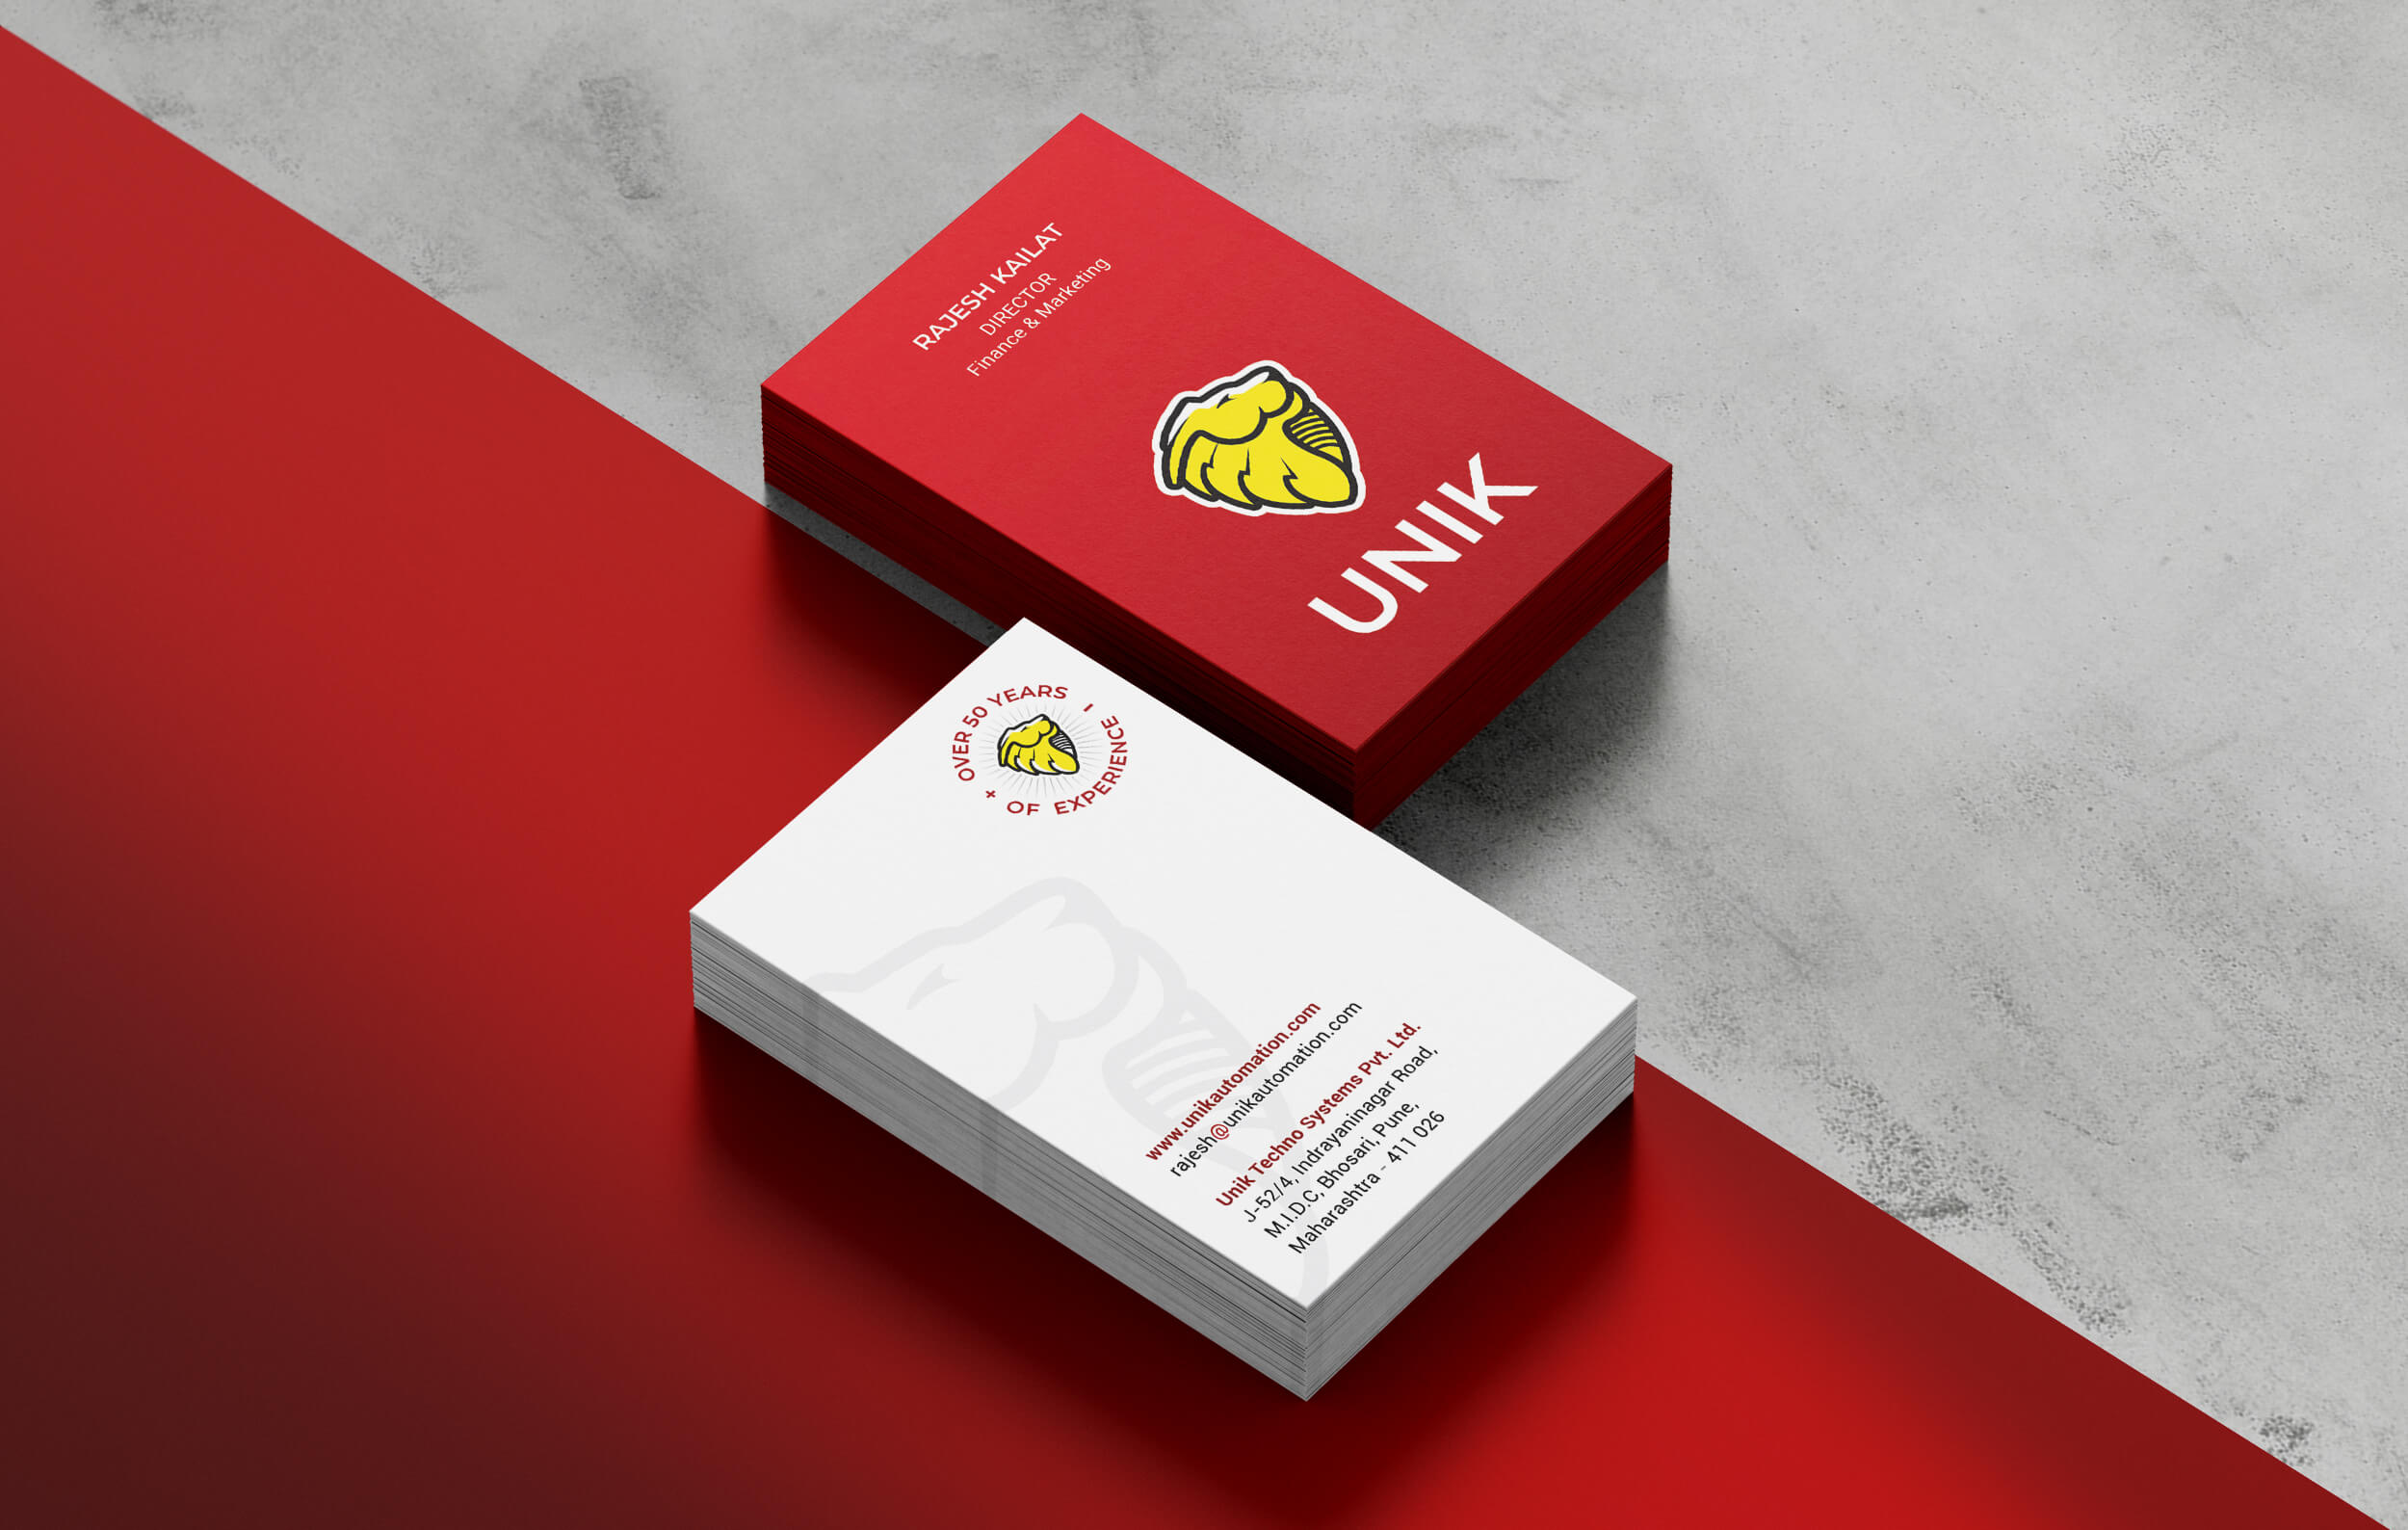 Unik-Automation-brand-logo-identity-business-cards-design-by-Artisticodopeo-Designz-(2).jpg Image